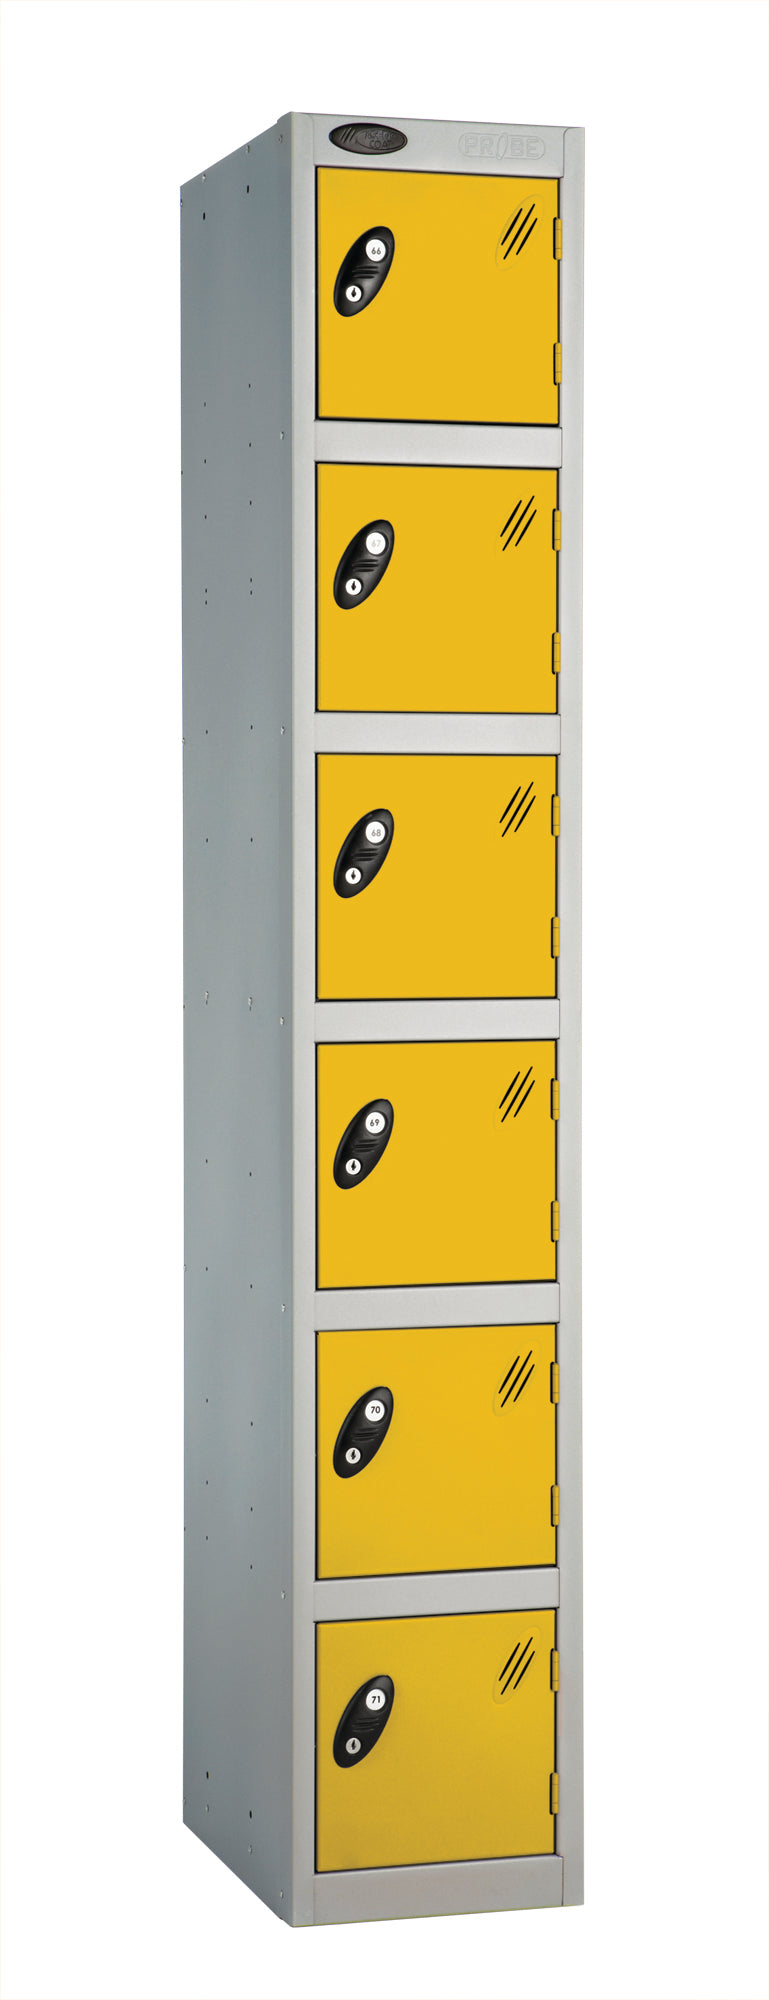 PROBEBOX STANDARD 1 NEST STEEL LOCKERS - ROYAL YELLOW 6 DOOR Storage Lockers > Lockers > Cabinets > Storage > Probe > One Stop For Safety   